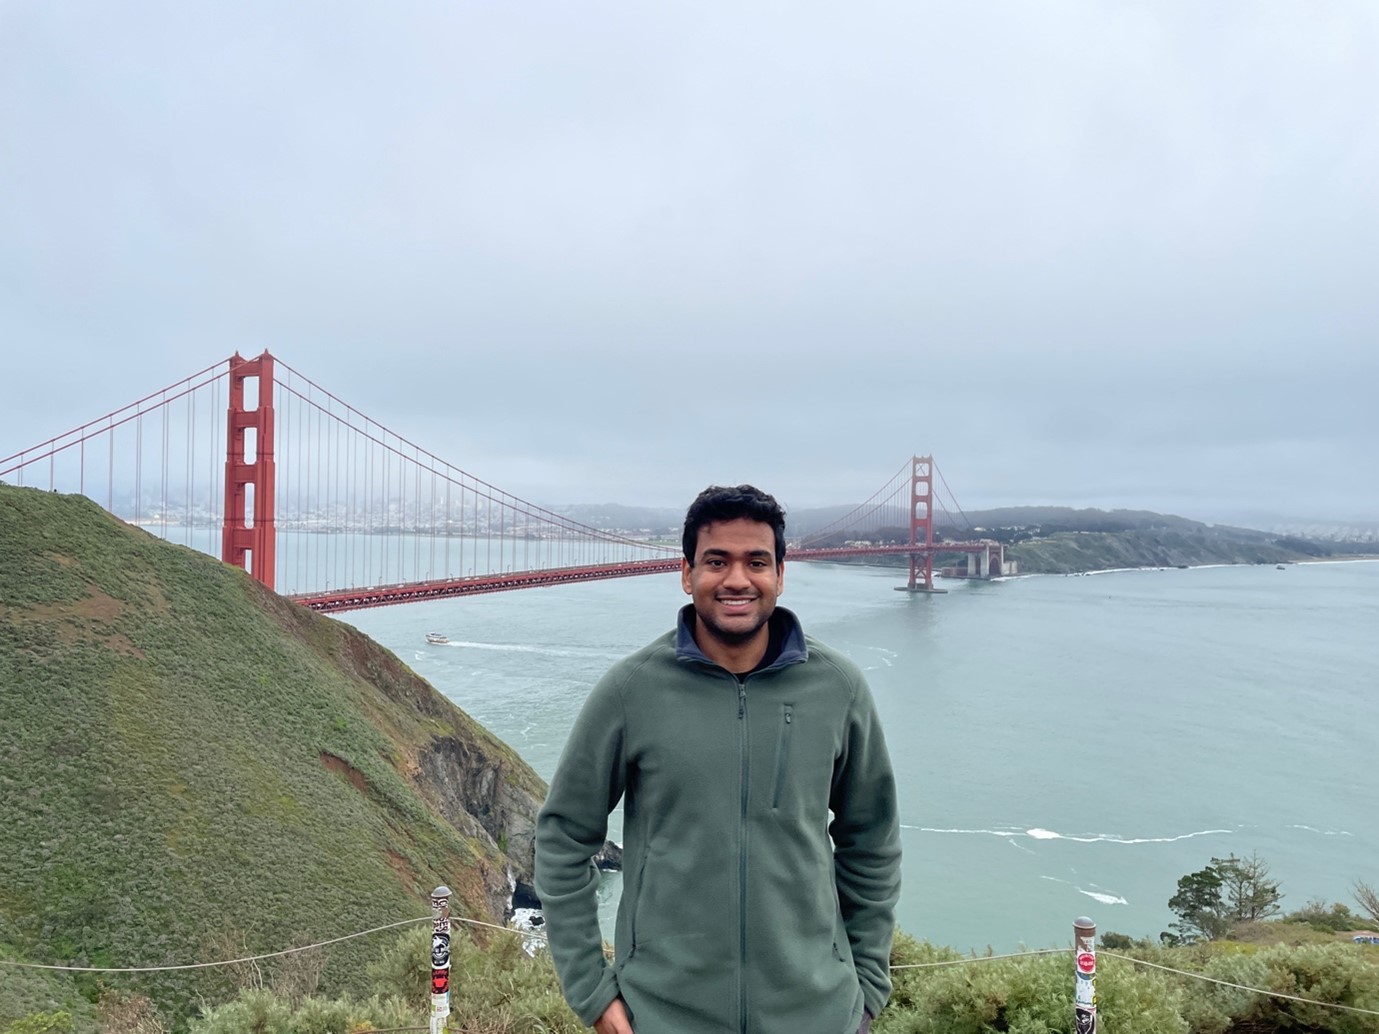 Vishaak in front of San Francisco’s Golden Gate Bridge